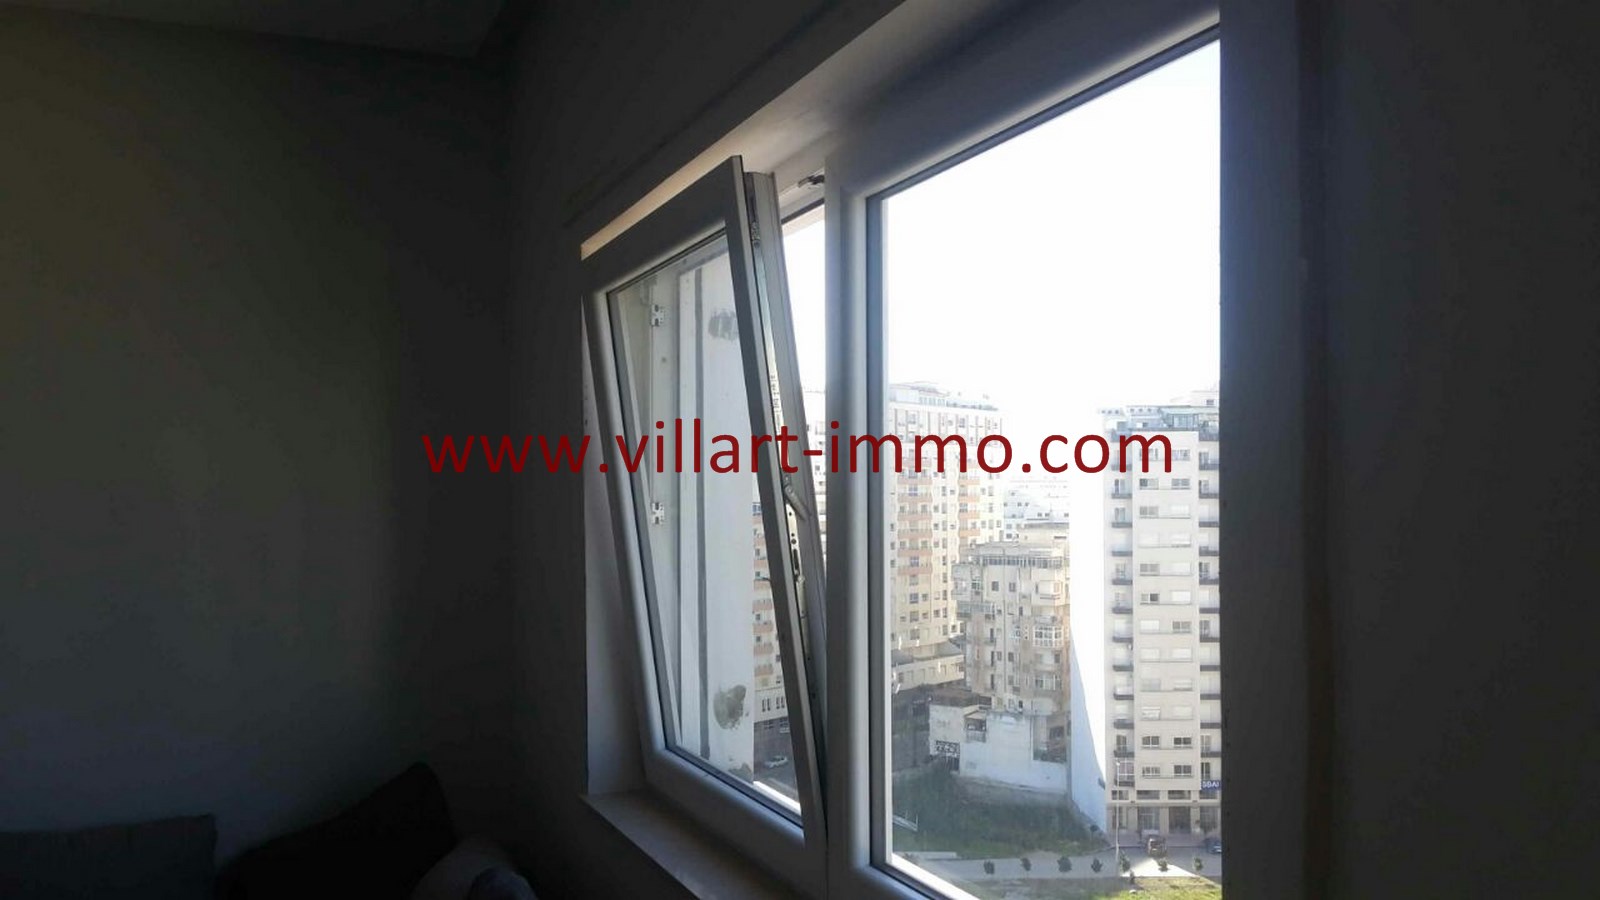 9-Vente-Appartement-Tanger-Malabata-Vue-Ville-VA490-Villart Immo (Copier)